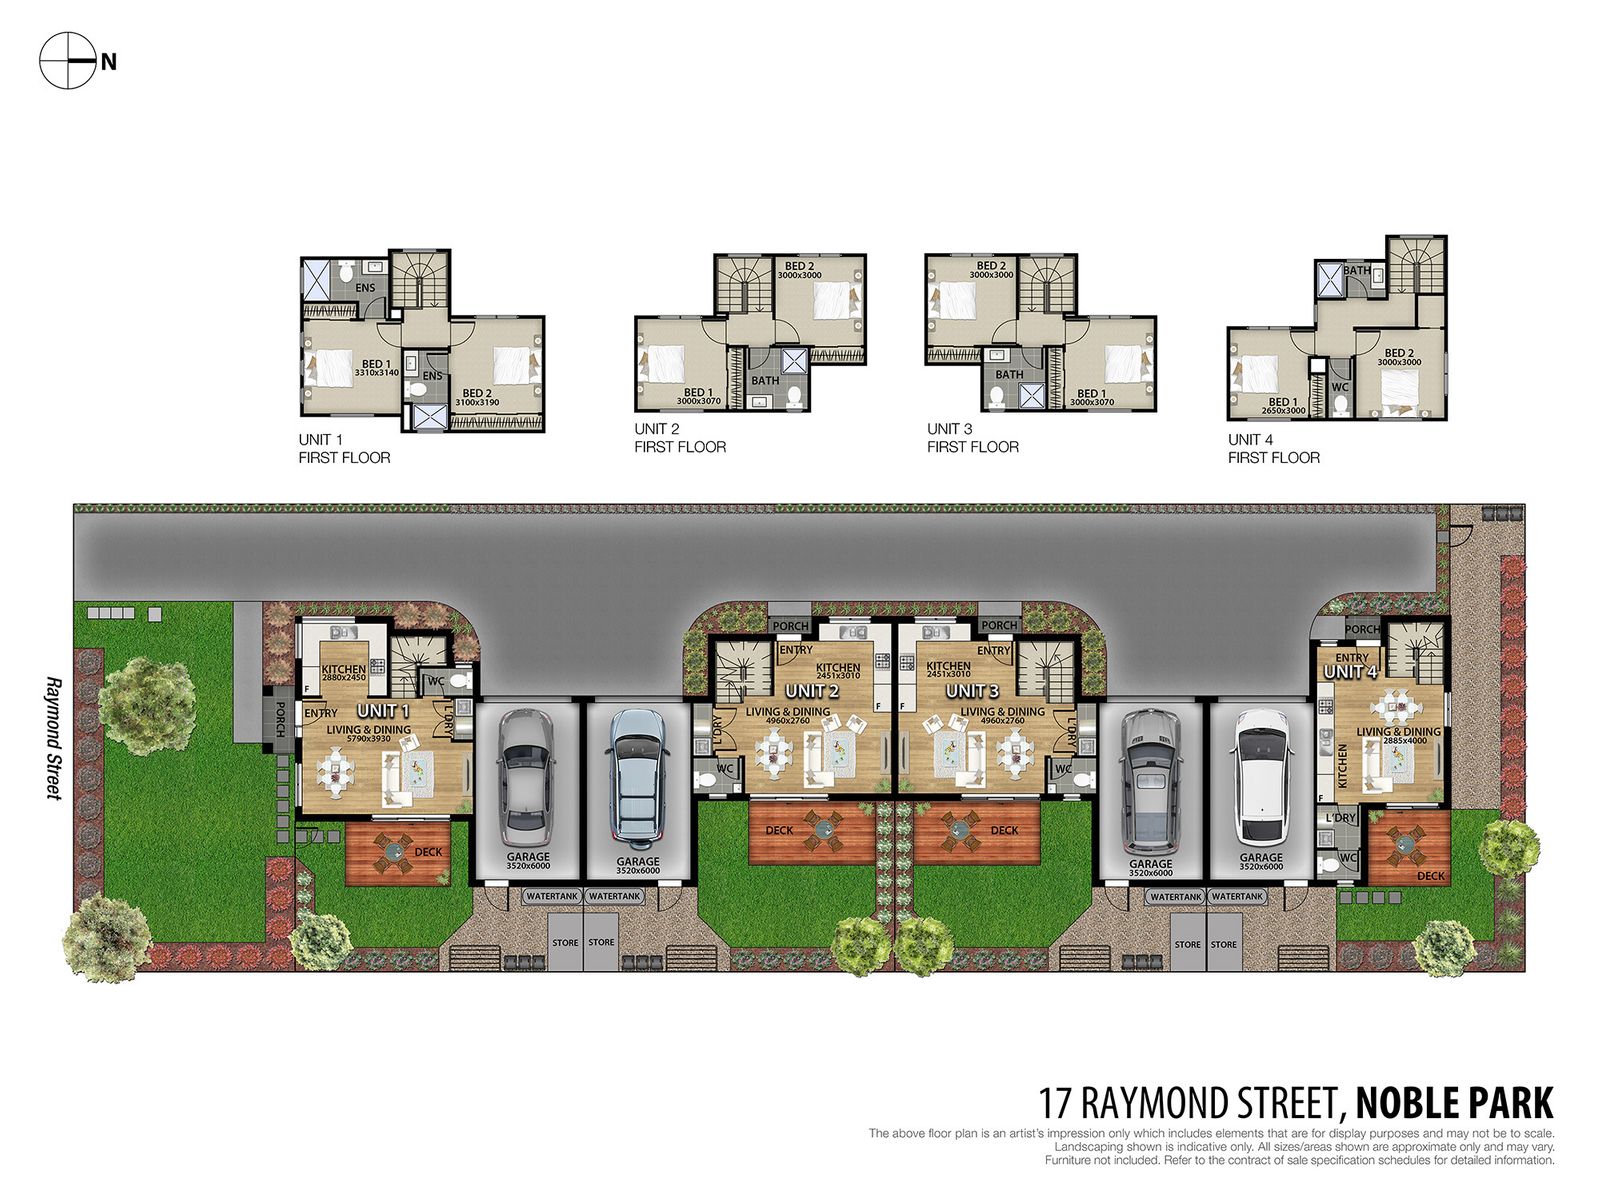 17 Raymond Street Noble Park Floorplan (LR)